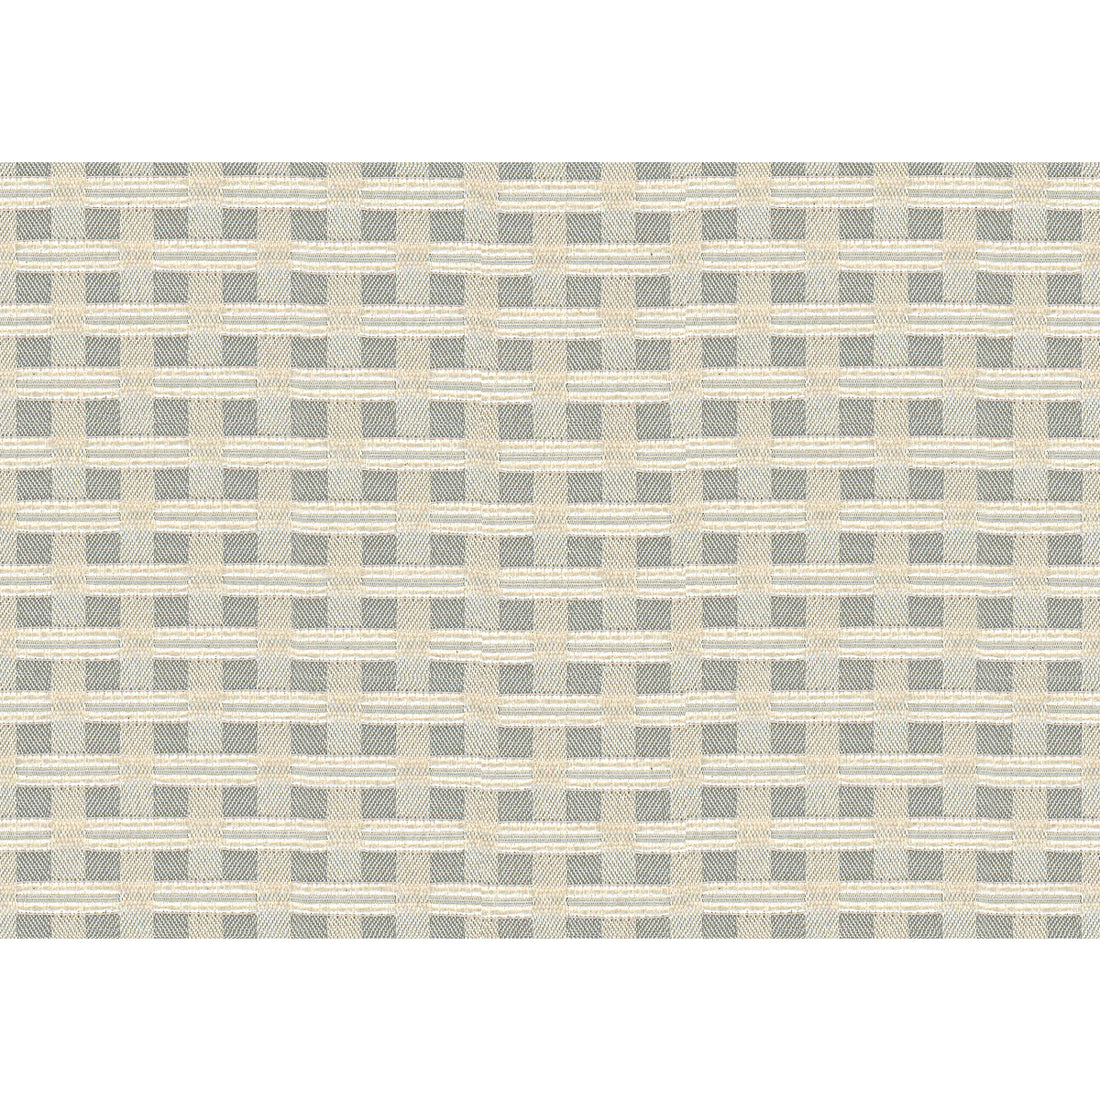 Kravet Smart fabric in 34315-116 color - pattern 34315.116.0 - by Kravet Smart